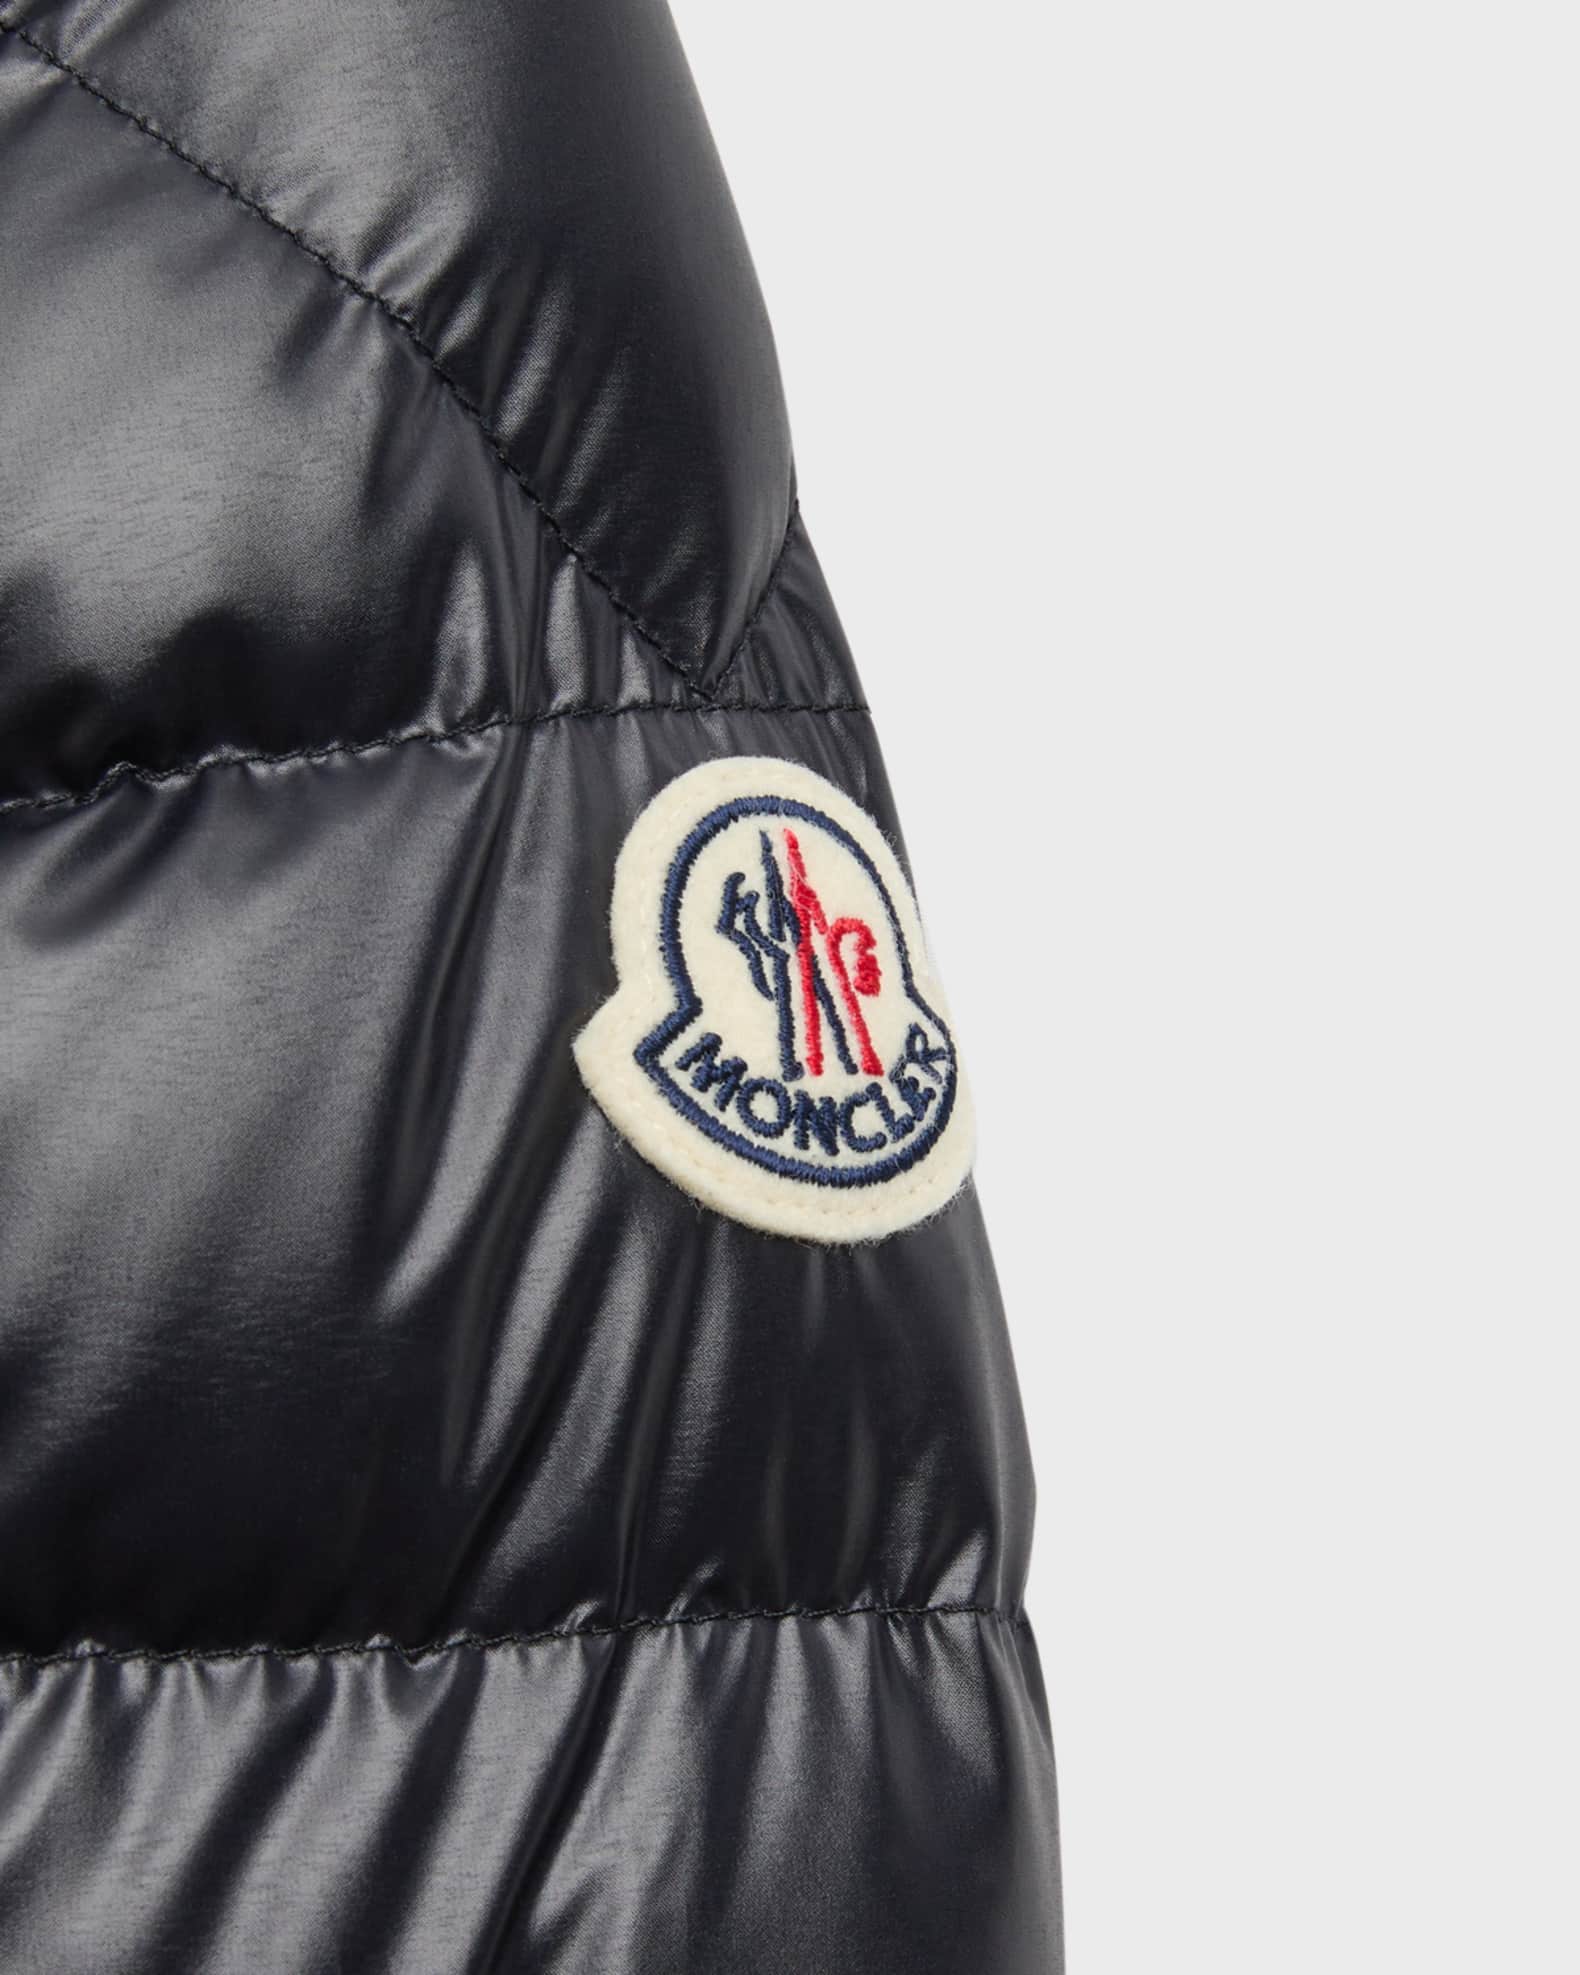 Moncler Boy's Bourne Puffer Jacket, Size 8-14 | Neiman Marcus